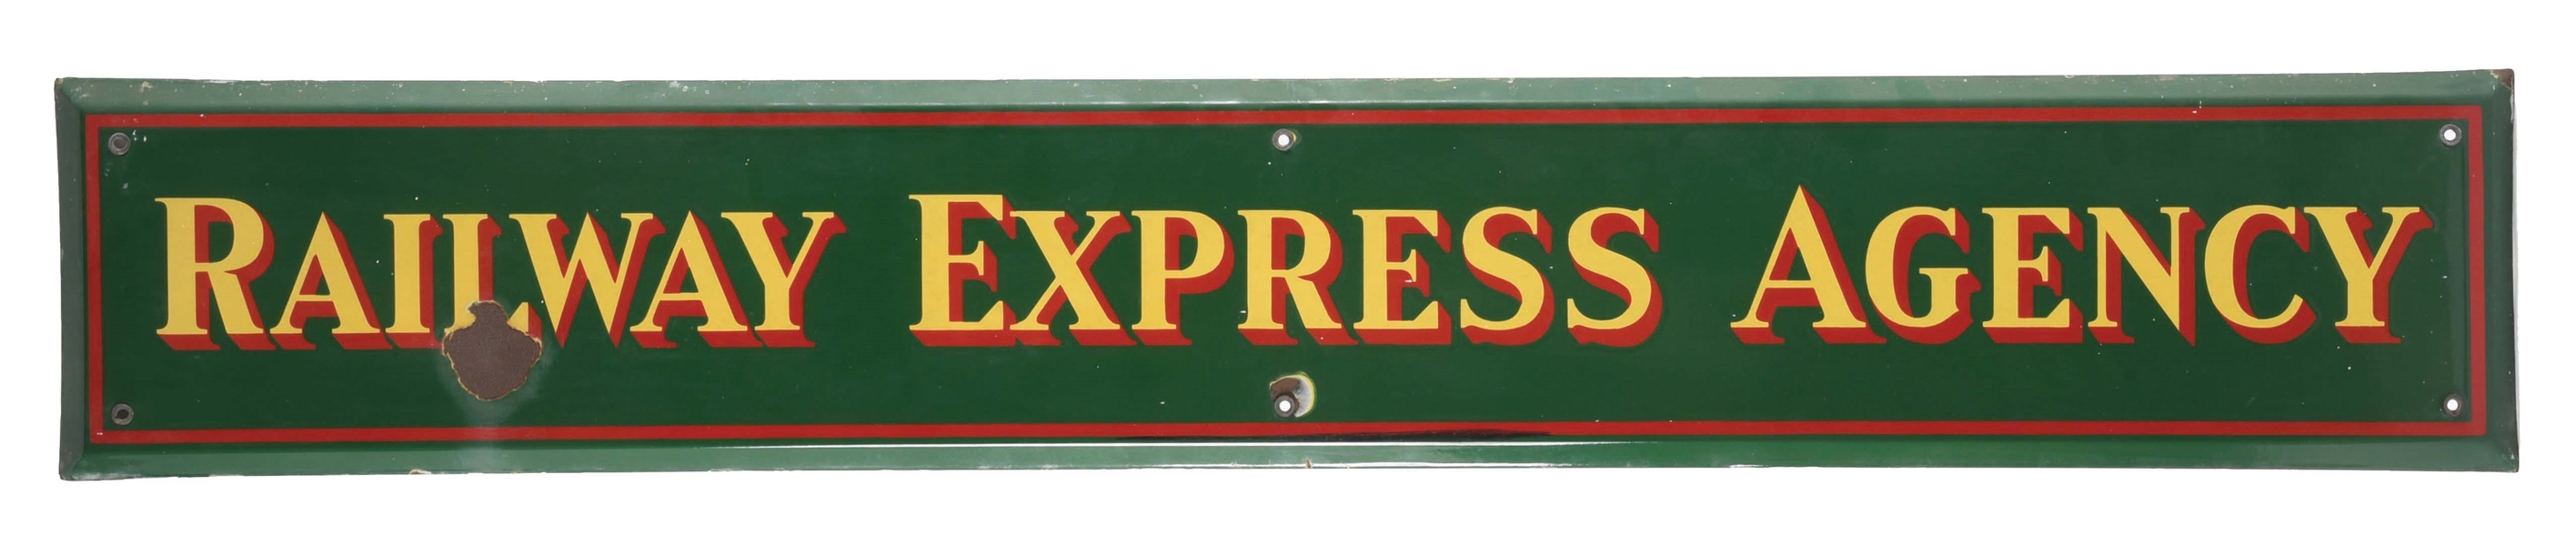 RAILWAY EXPRESS AGENCY PORCELAIN SIGN W/ SELF FRAMED EDGE. 